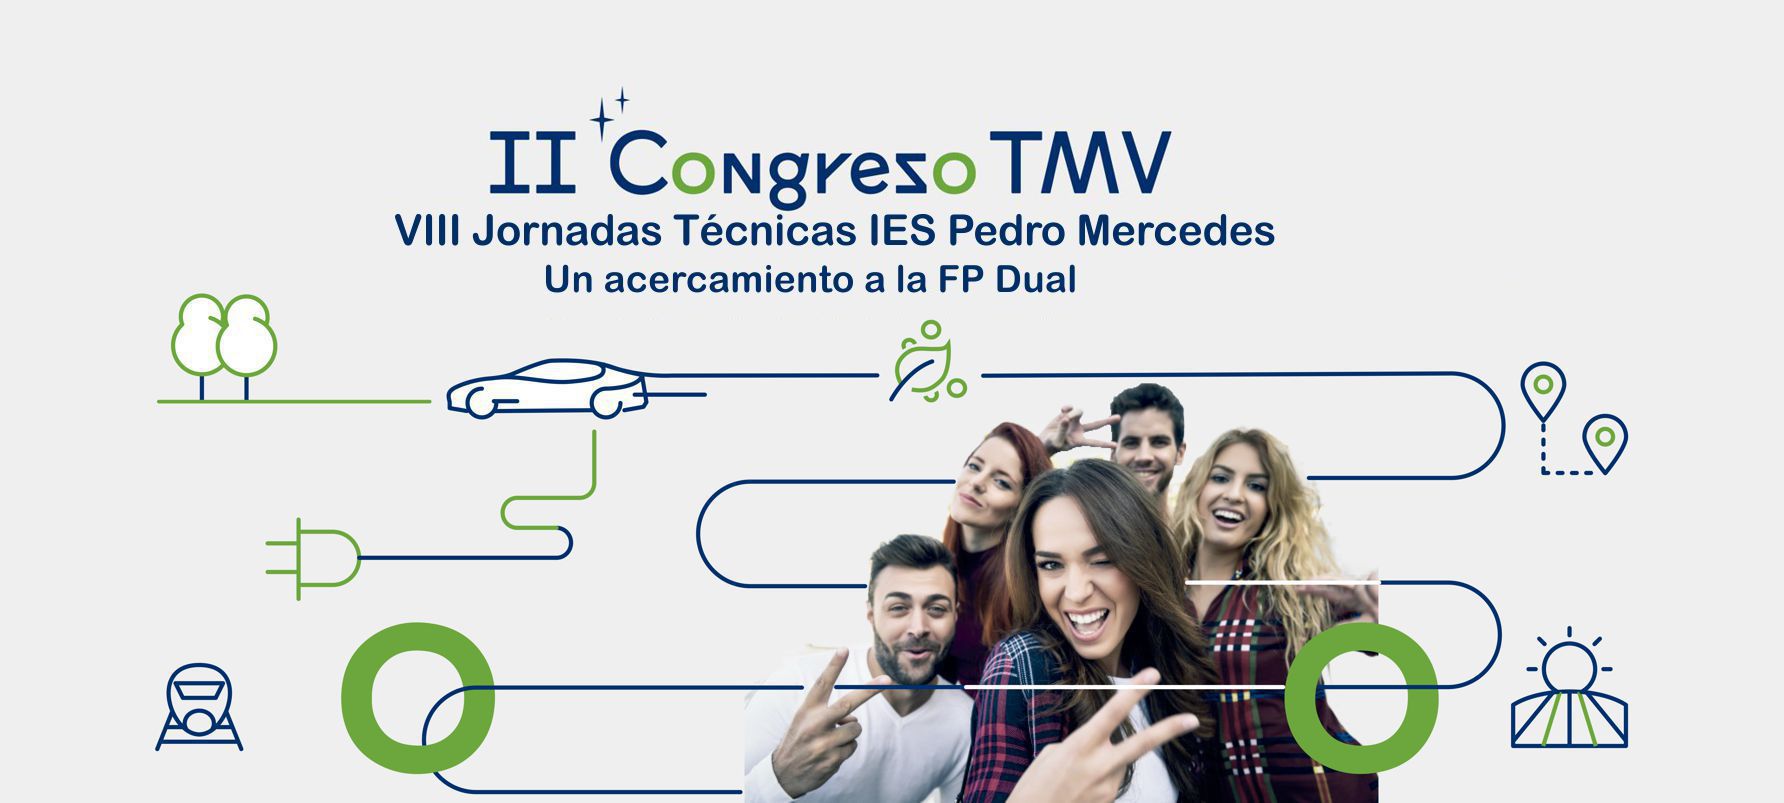 II Congreso TMV